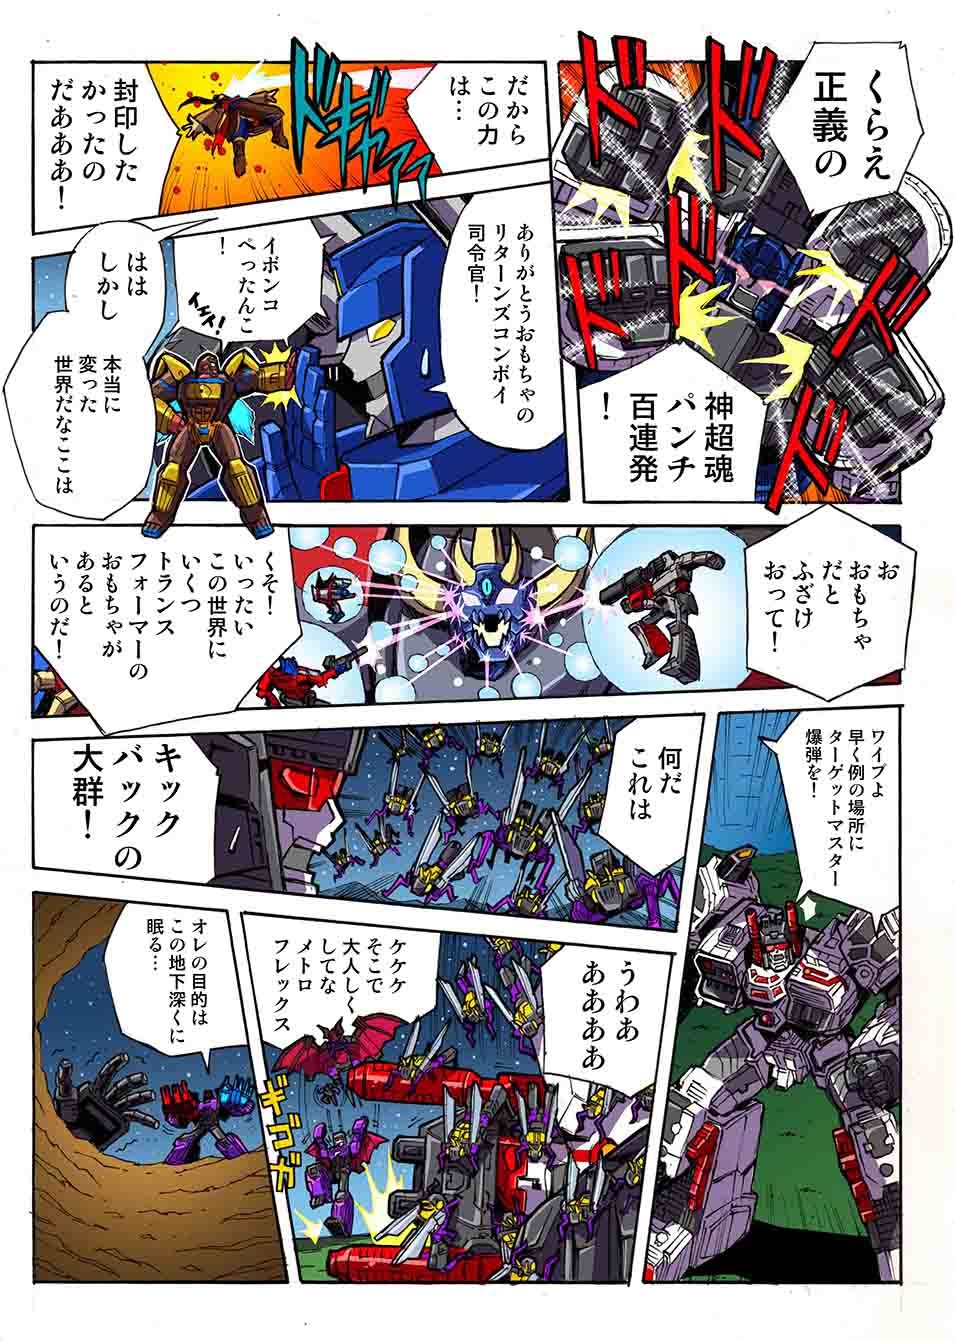 Transformers News: Takara Tomy Transformers Legends Manga Chapter 53 Now Online